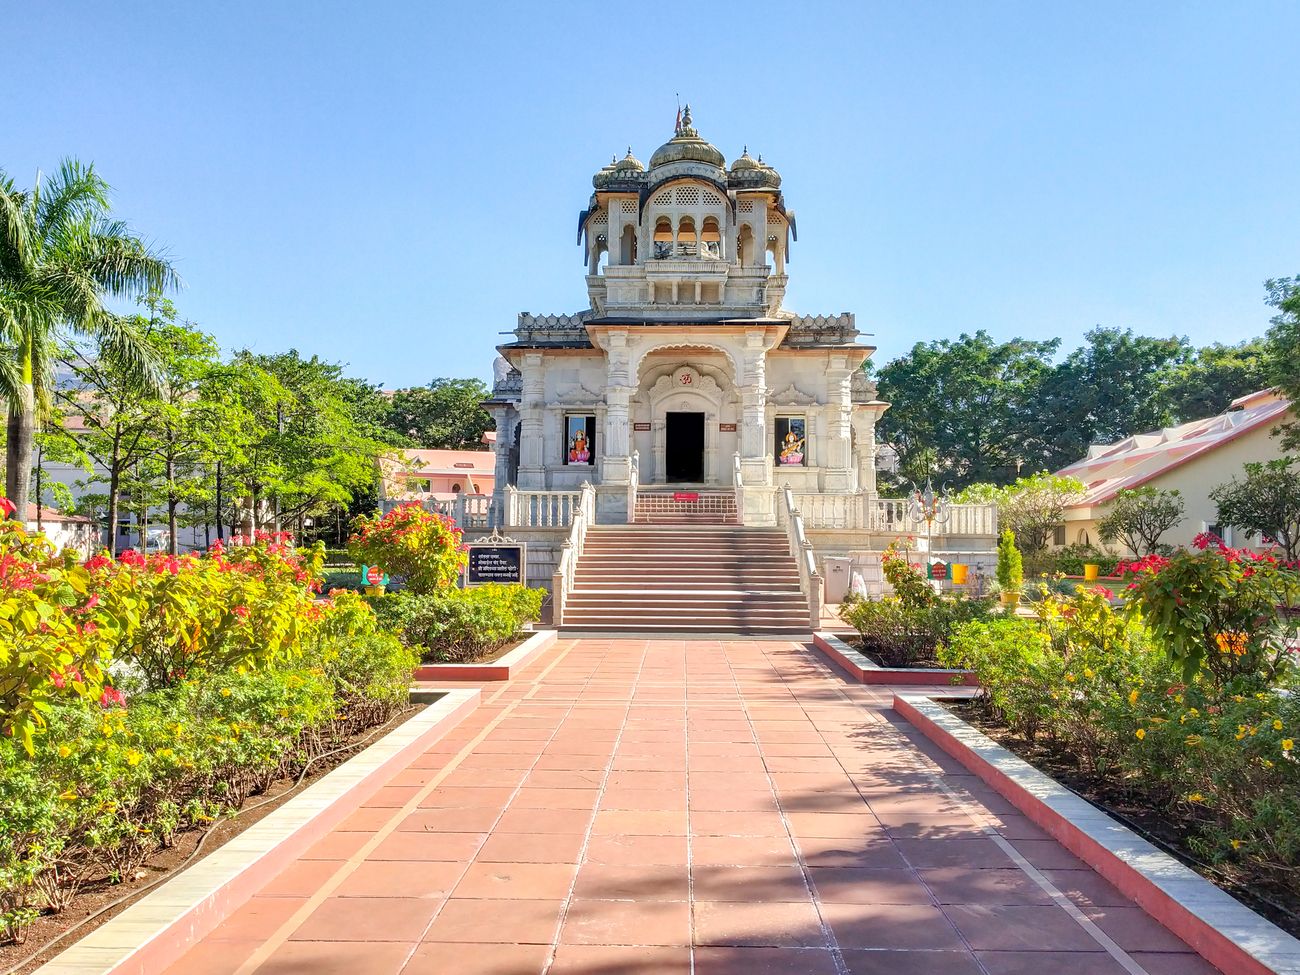 View of the entrance to the impressive Gajanan Maharaj Temple in Tryambak